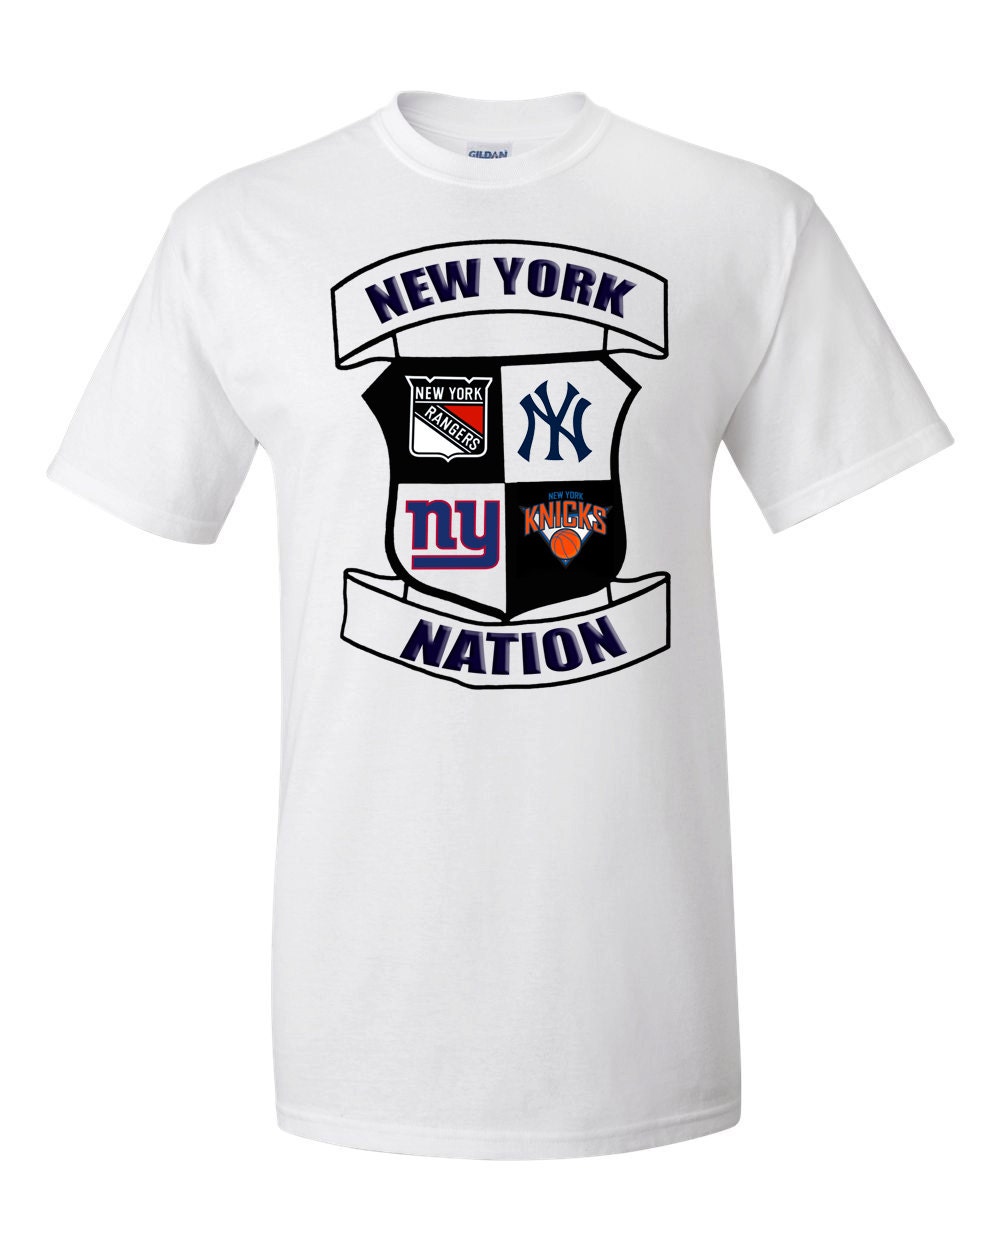 New York Nation T-Shirt New York Yankees Giants Rangers